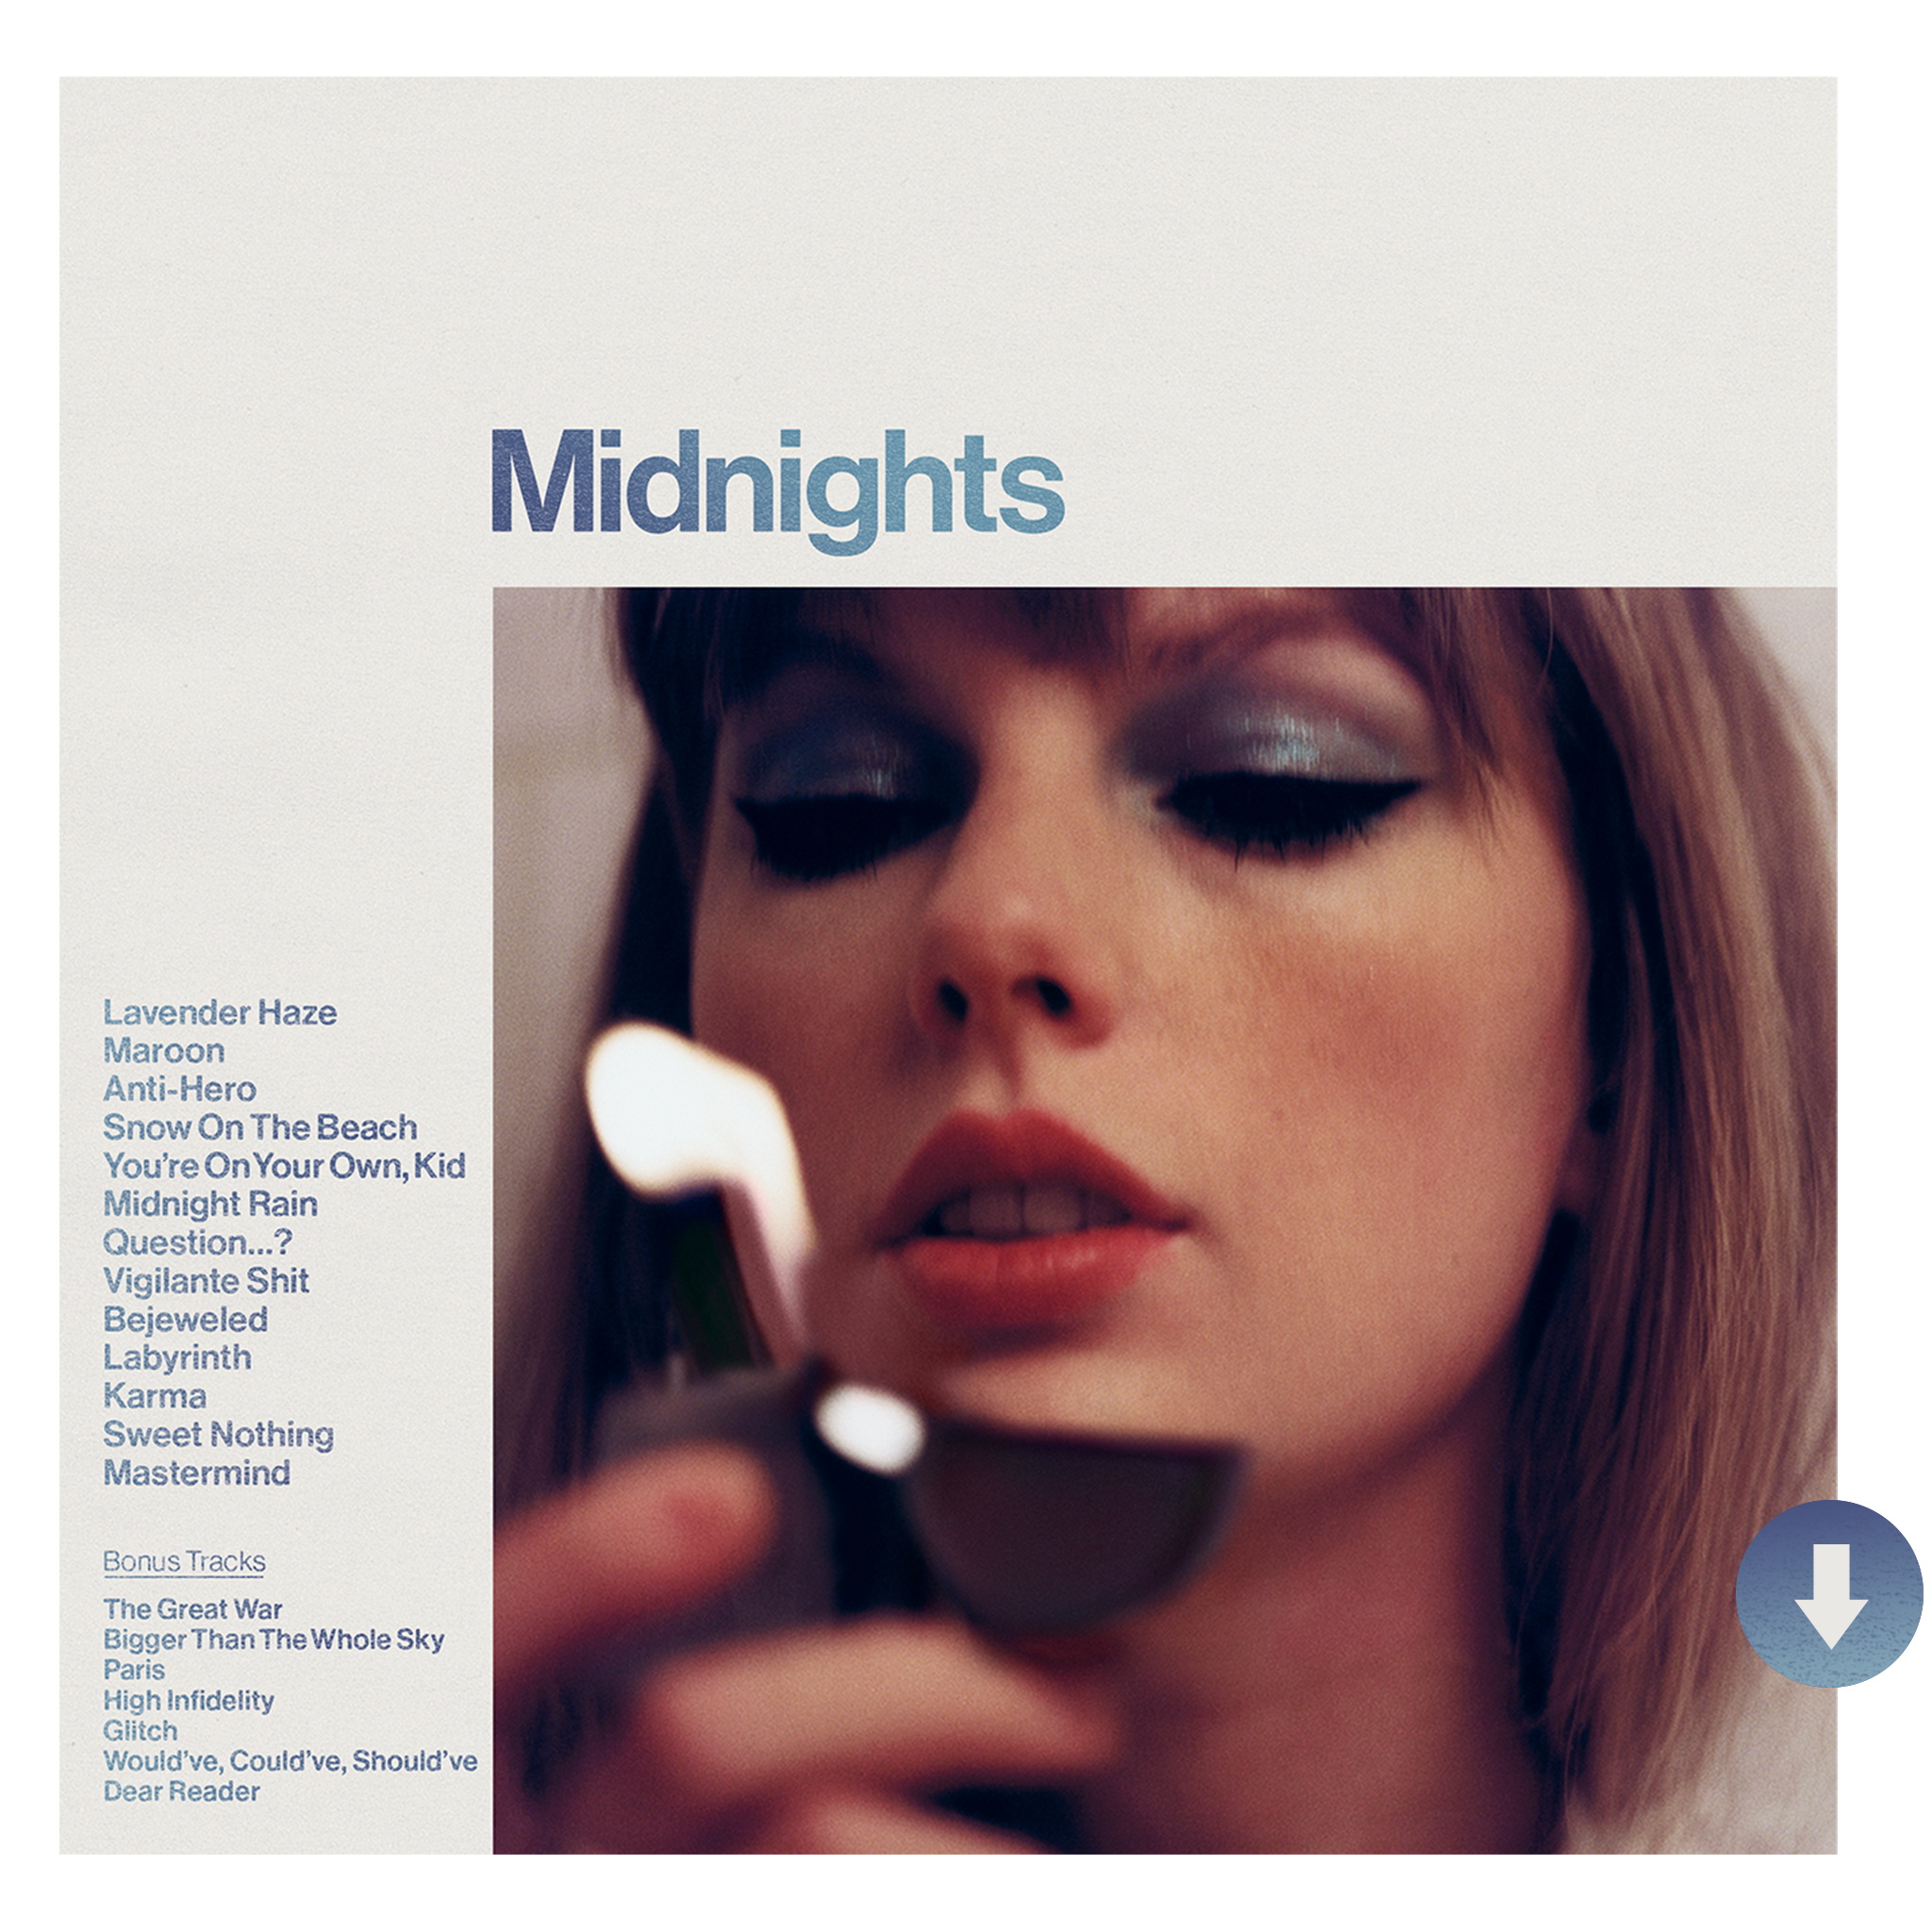 Midnights (3am Edition) Digital Album